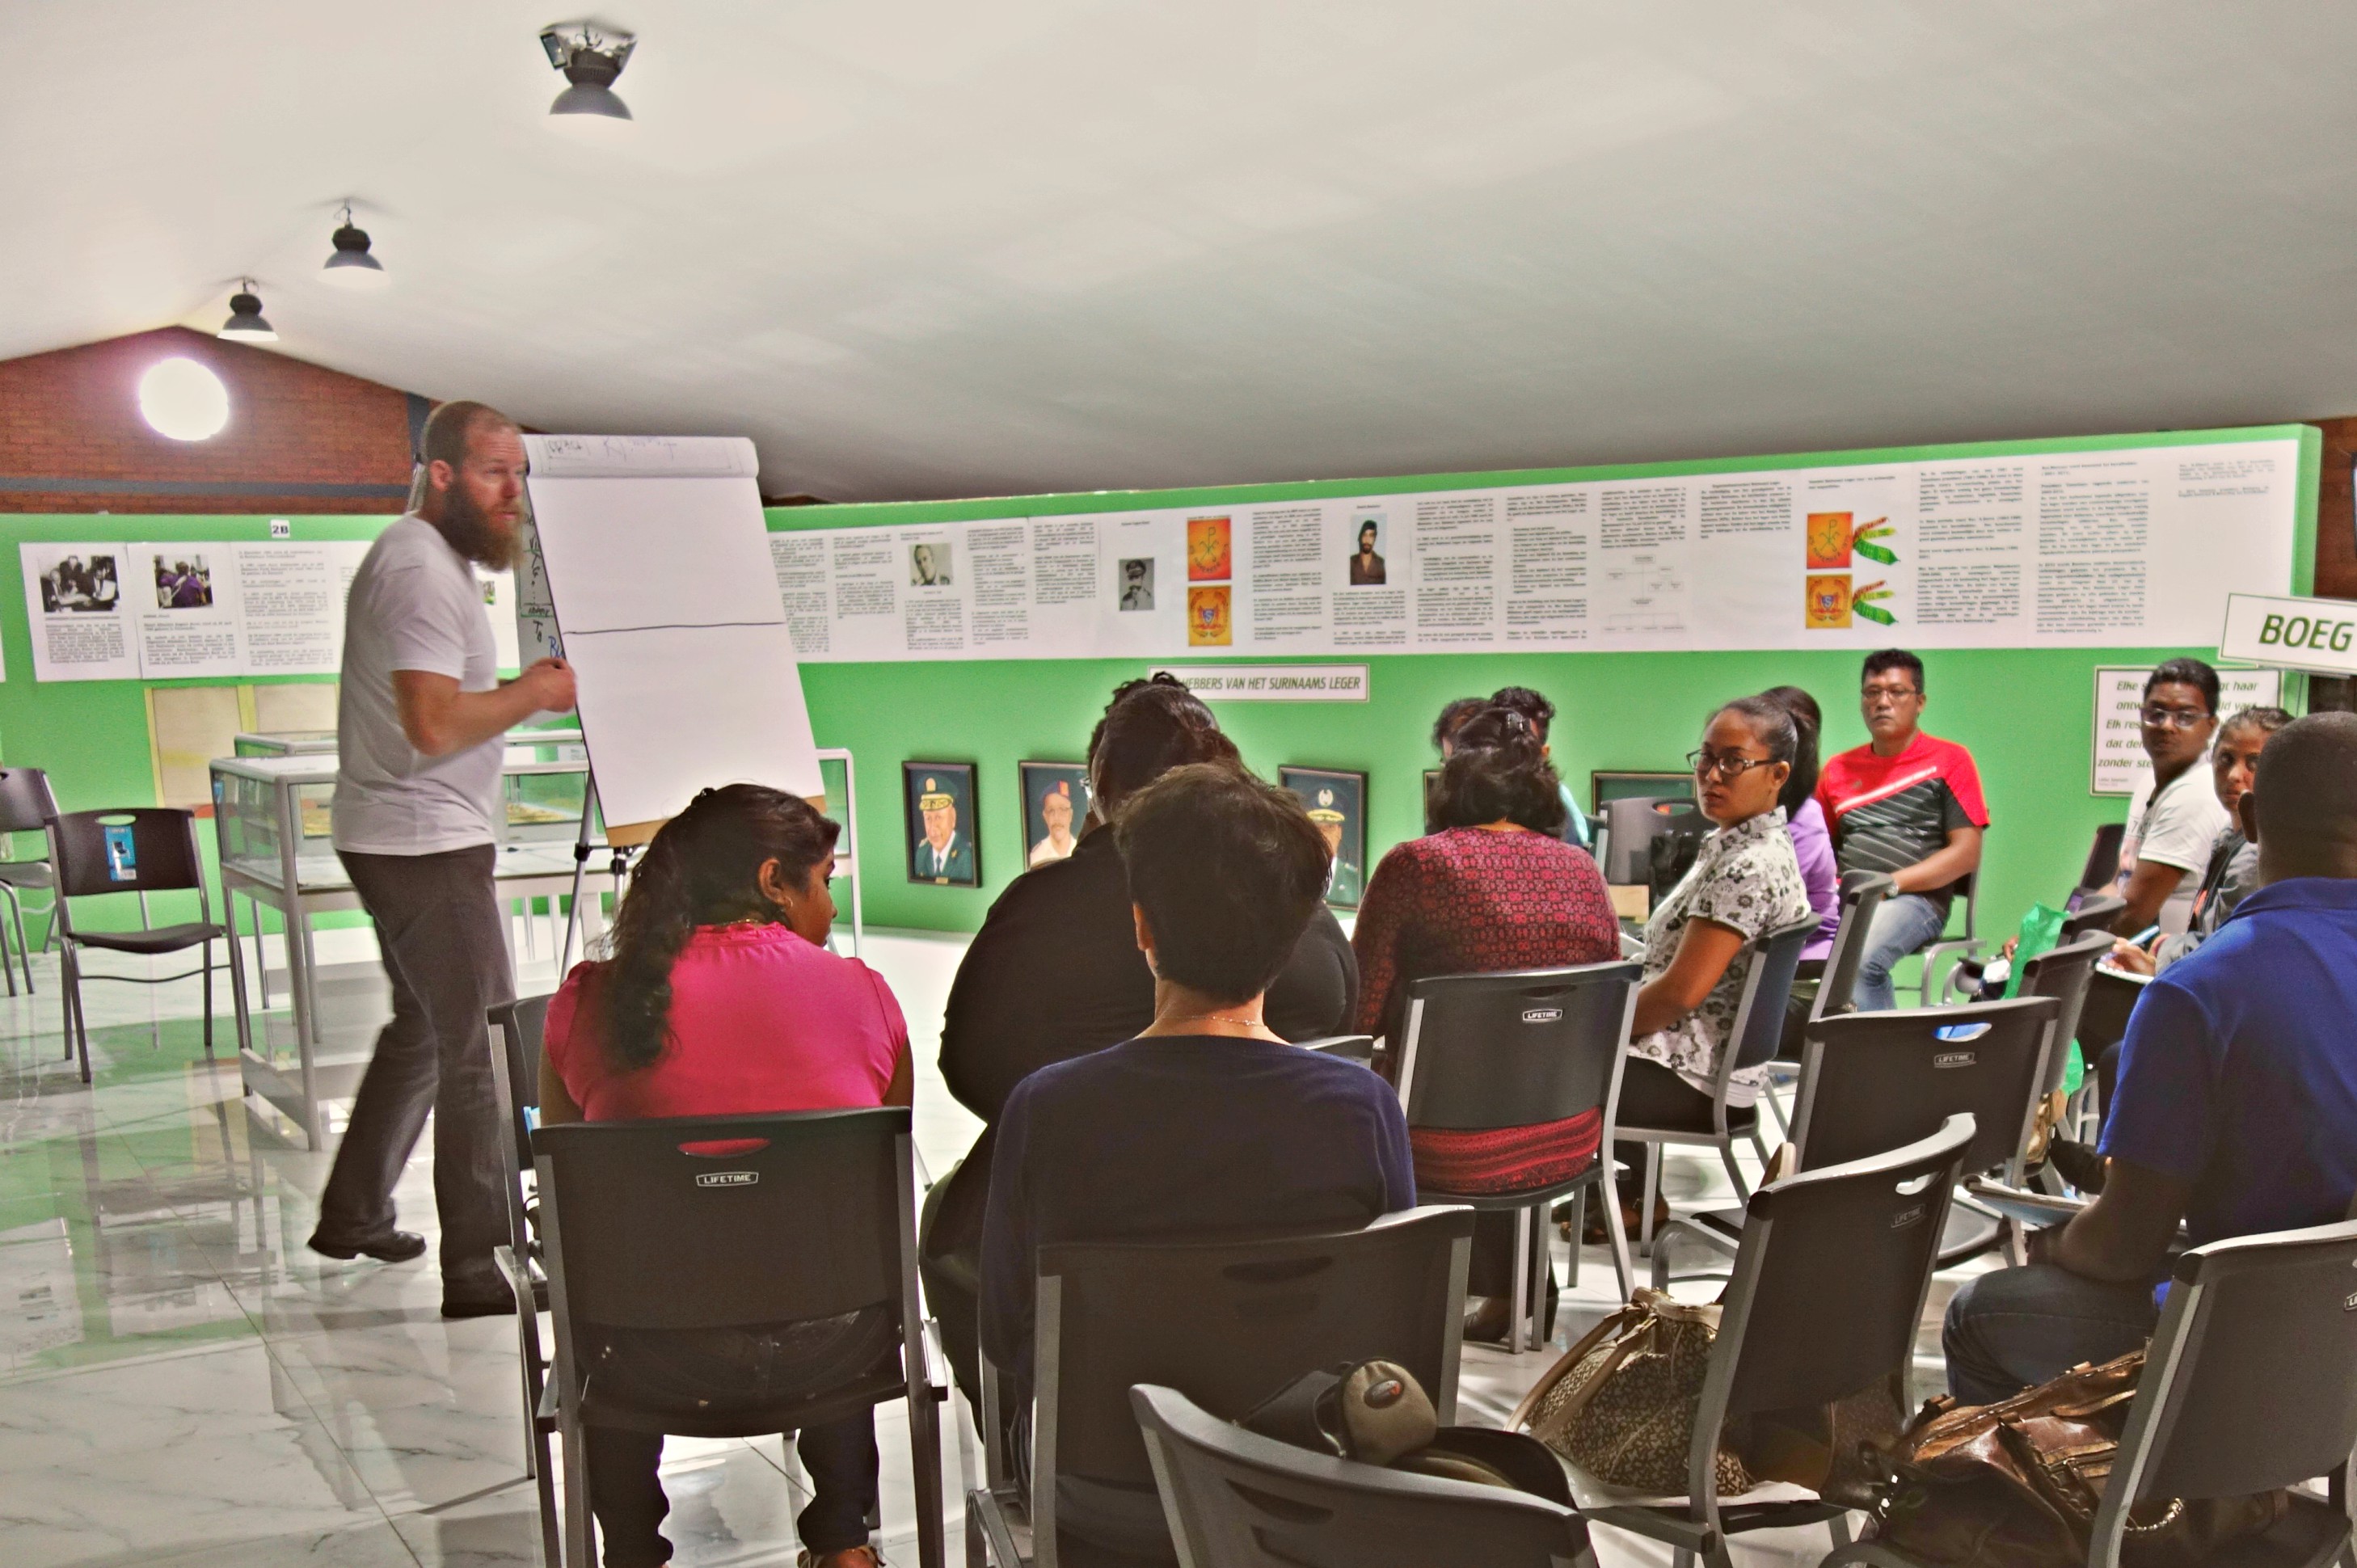 Marc Stappers hosting a workshop on managing indoor climate risks in archives in Surinam.